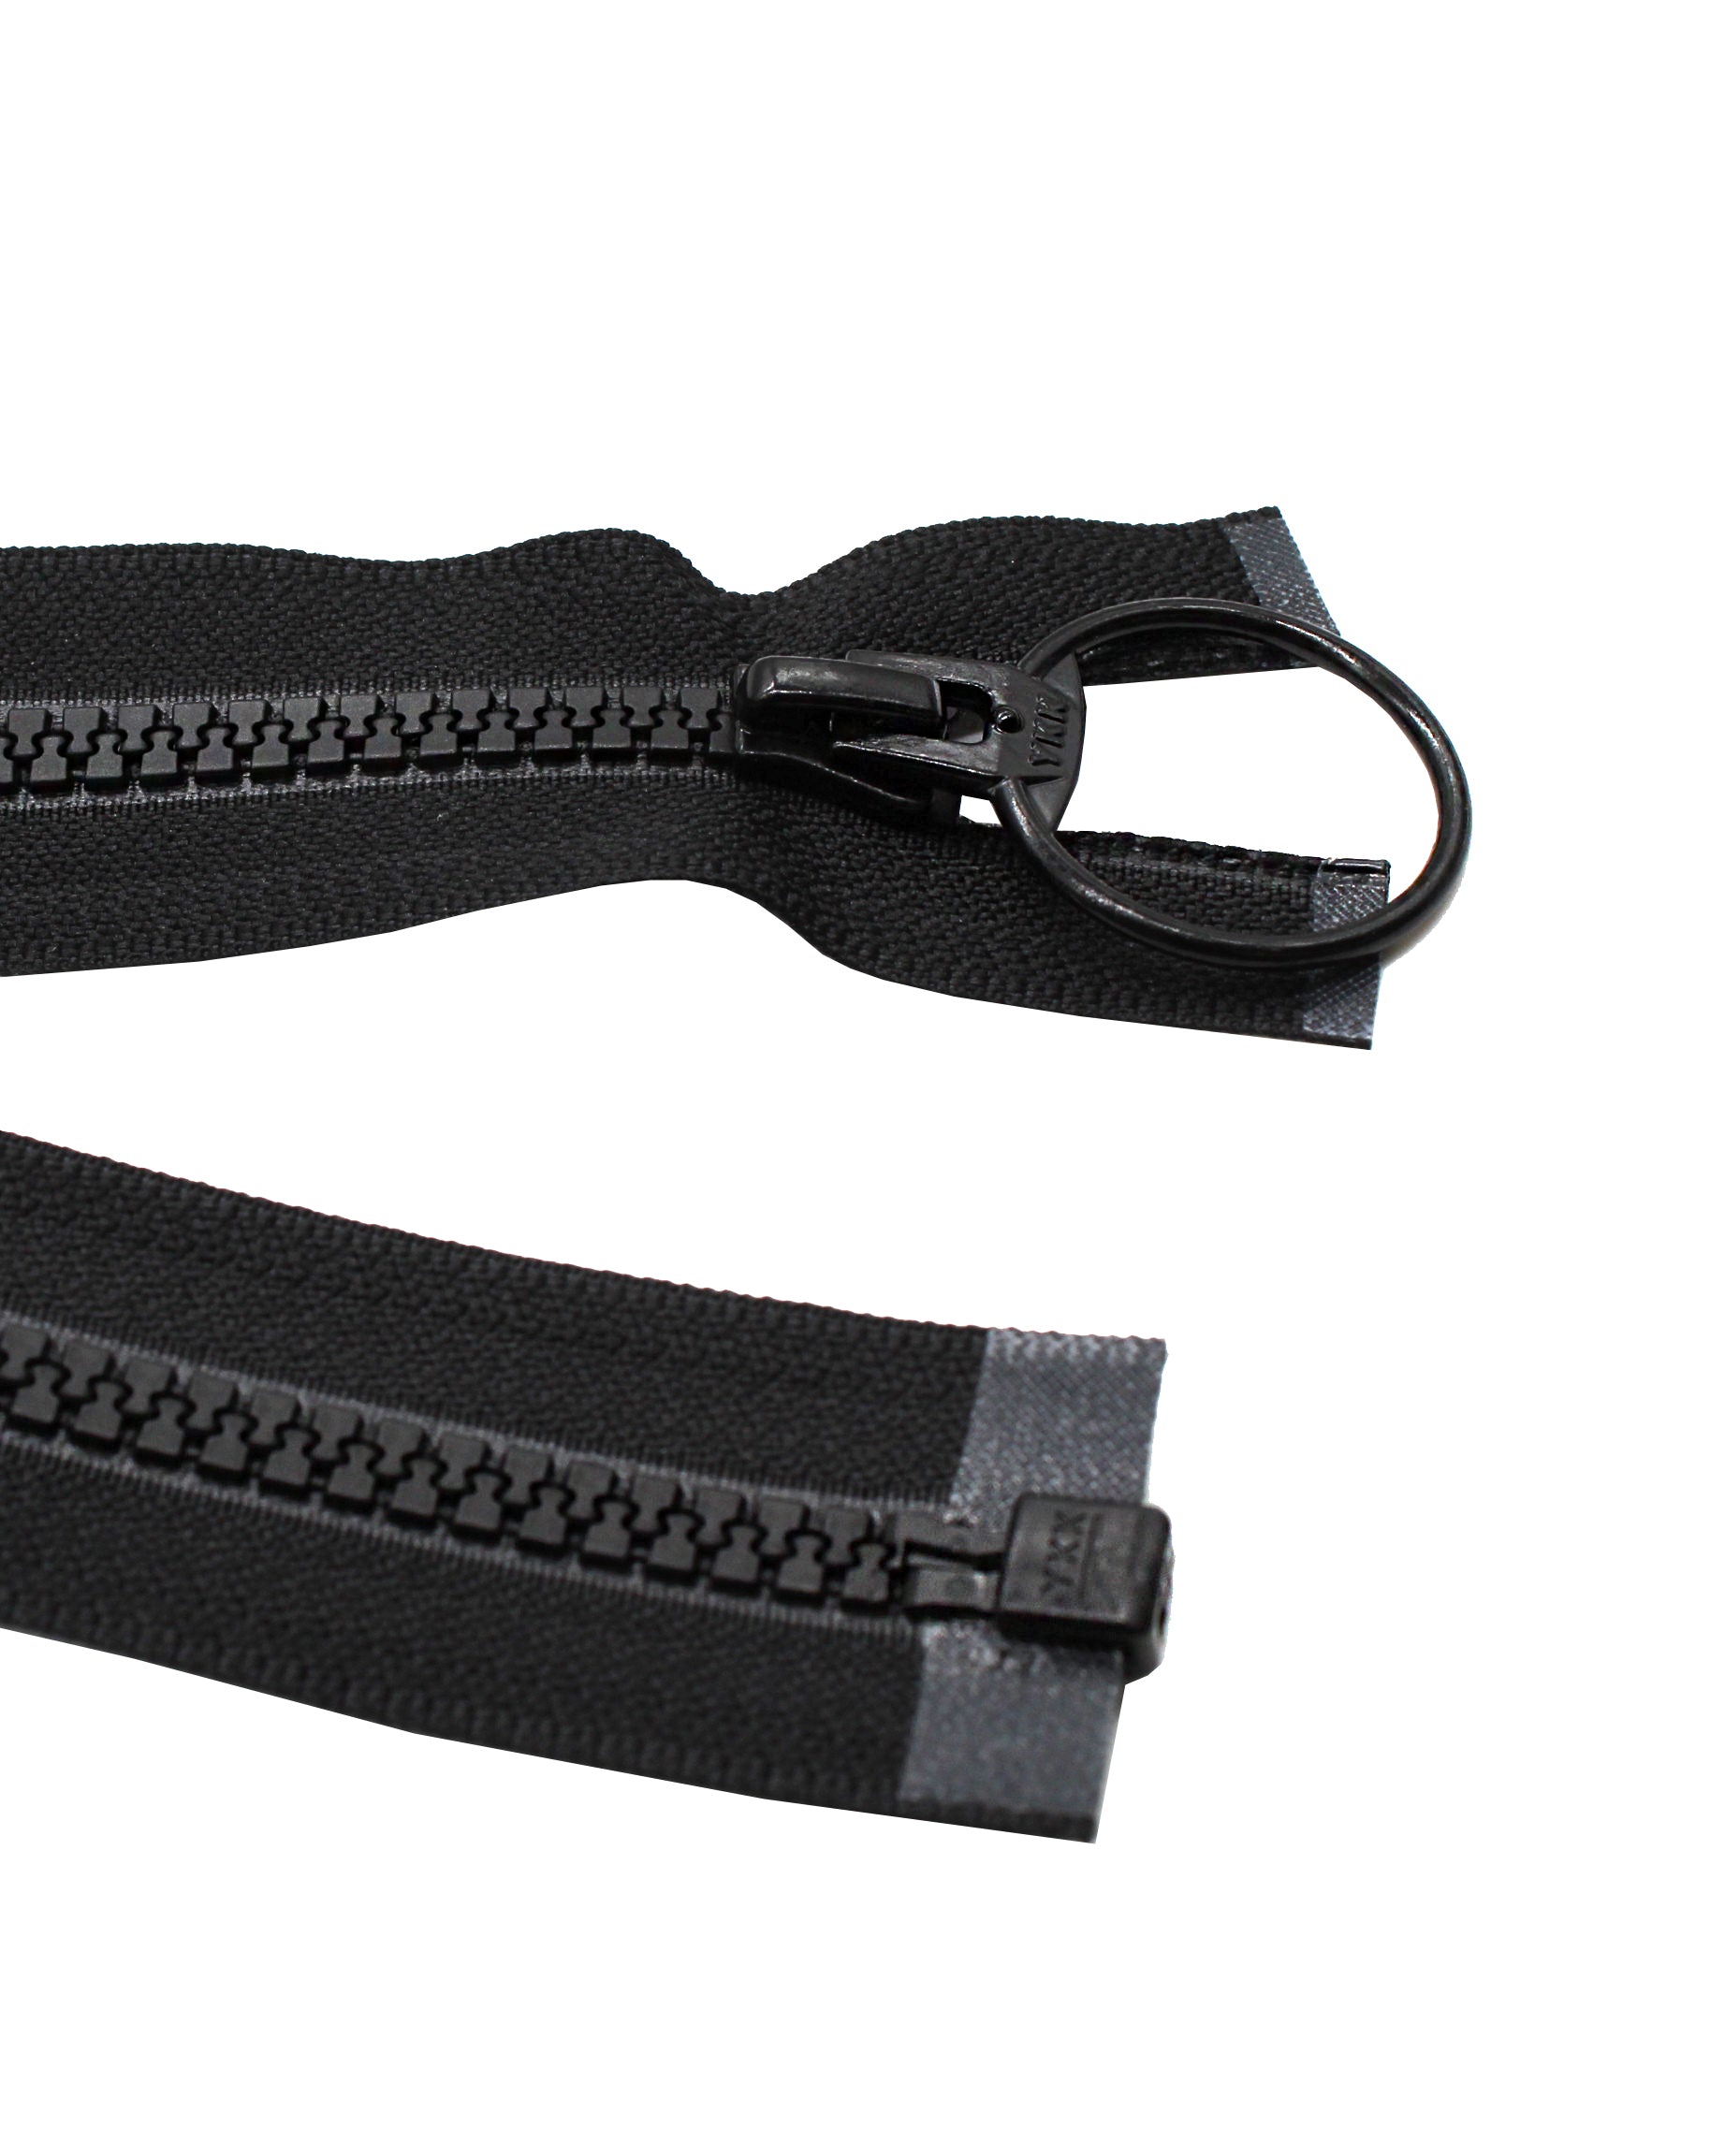 YKK #5 MT 2-Way Separating Reversible Zipper Old Style - 32 inch - Black